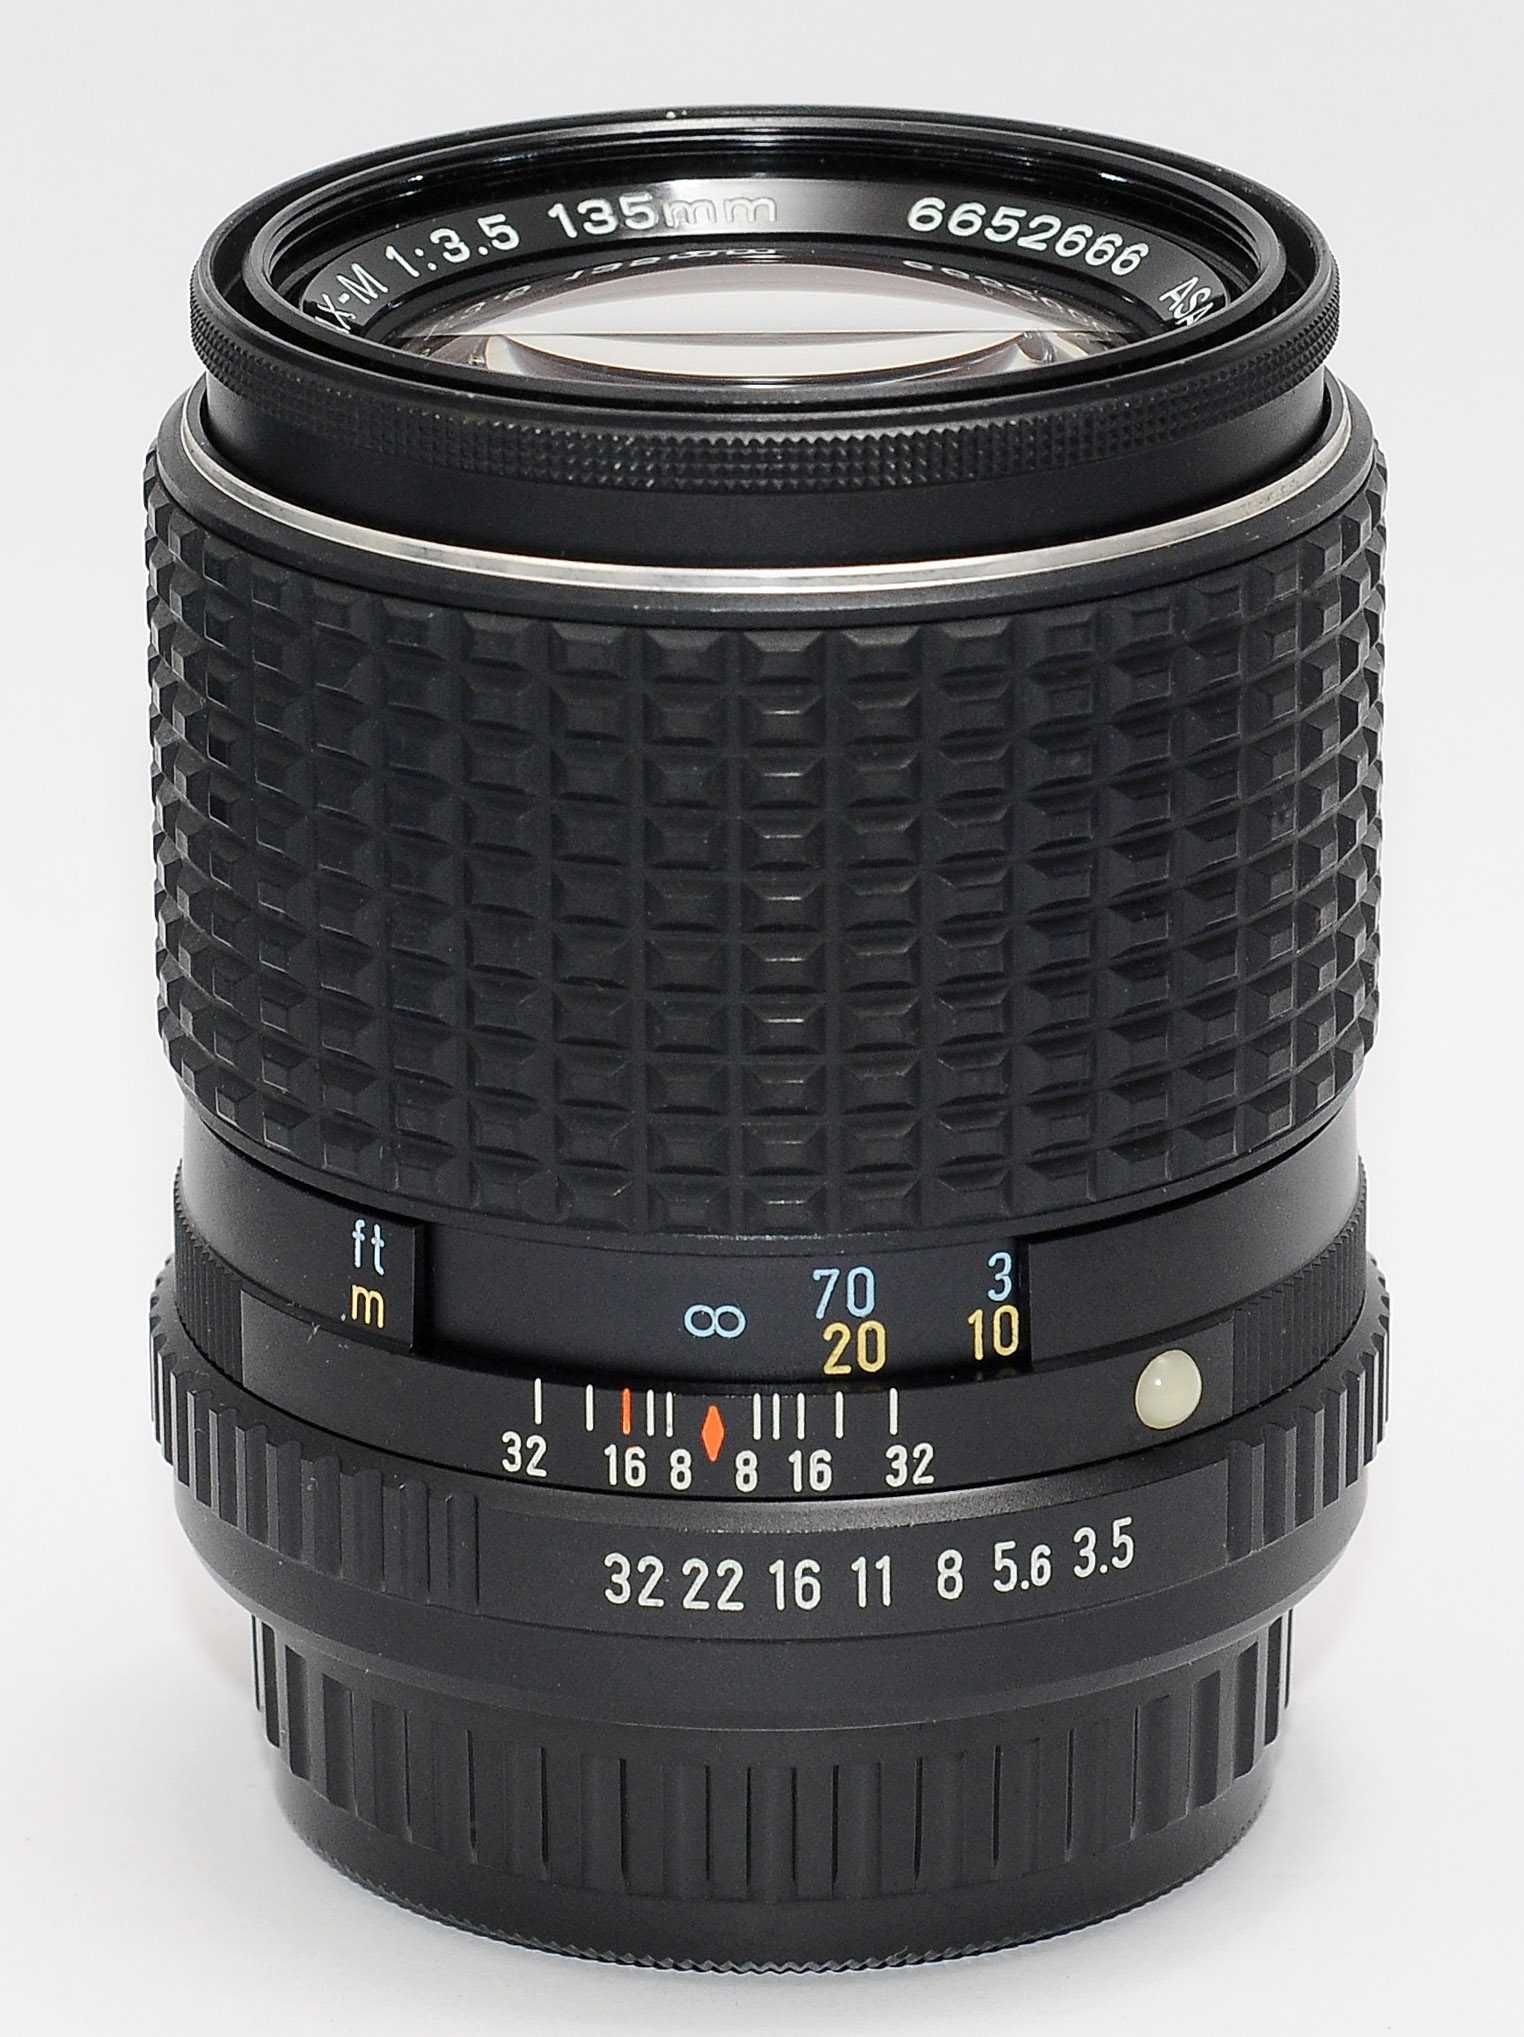 PENTAX-M SMC 135mm F/3.5 Lens Объектив Пентакс Портретник Фильтр